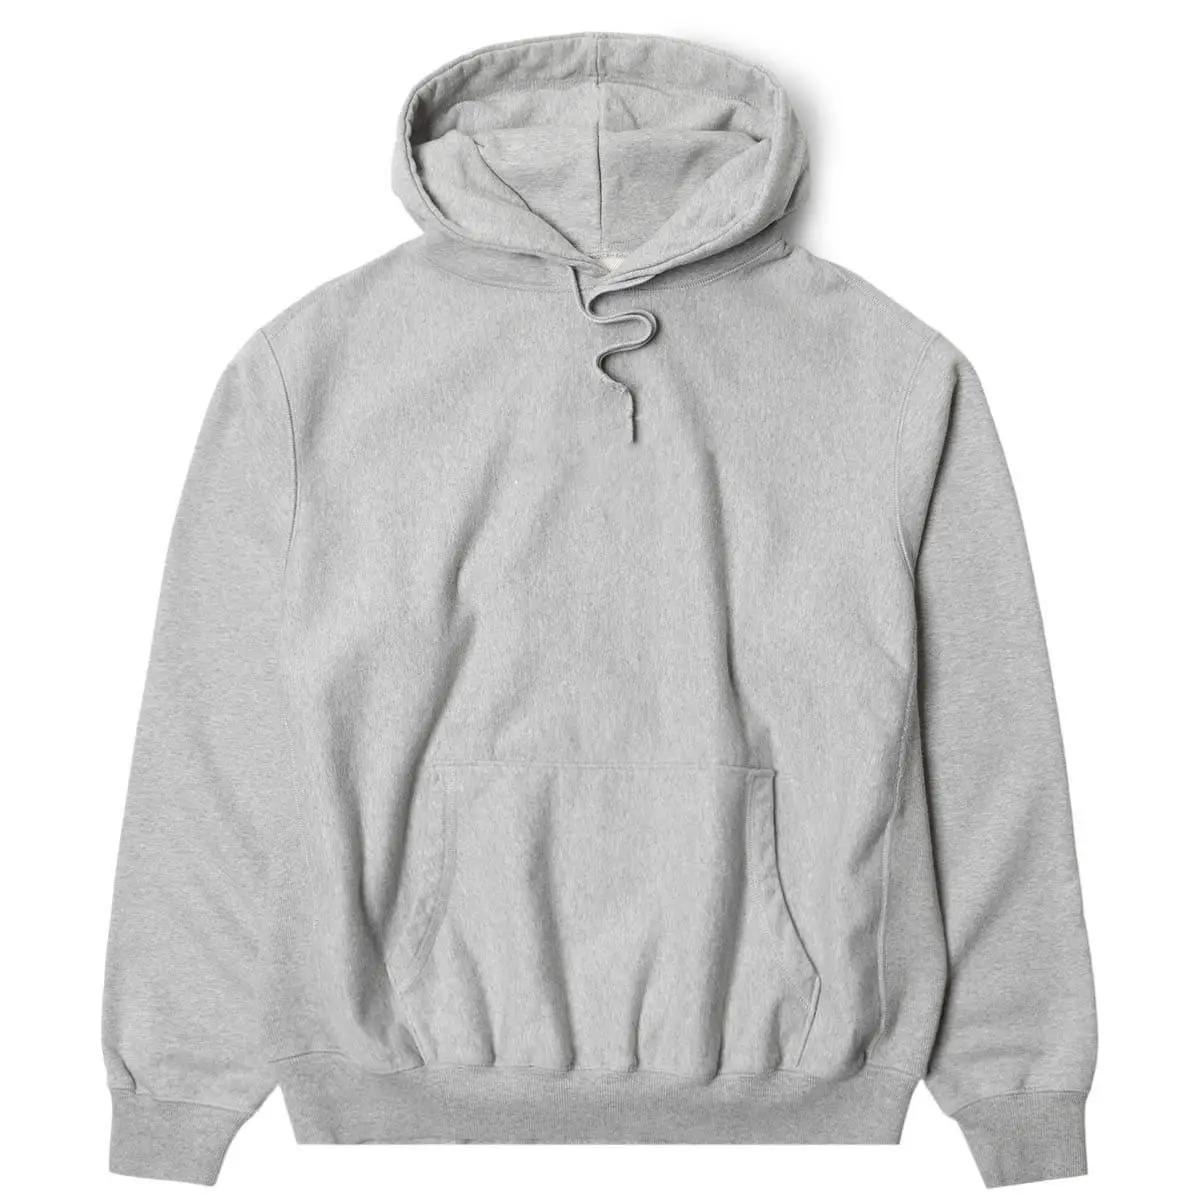 Custom Logo Oversized Sweatshirts Pullover Blank Plain Hoodies 320g 85% cotton 15% polyester Men Hoodies